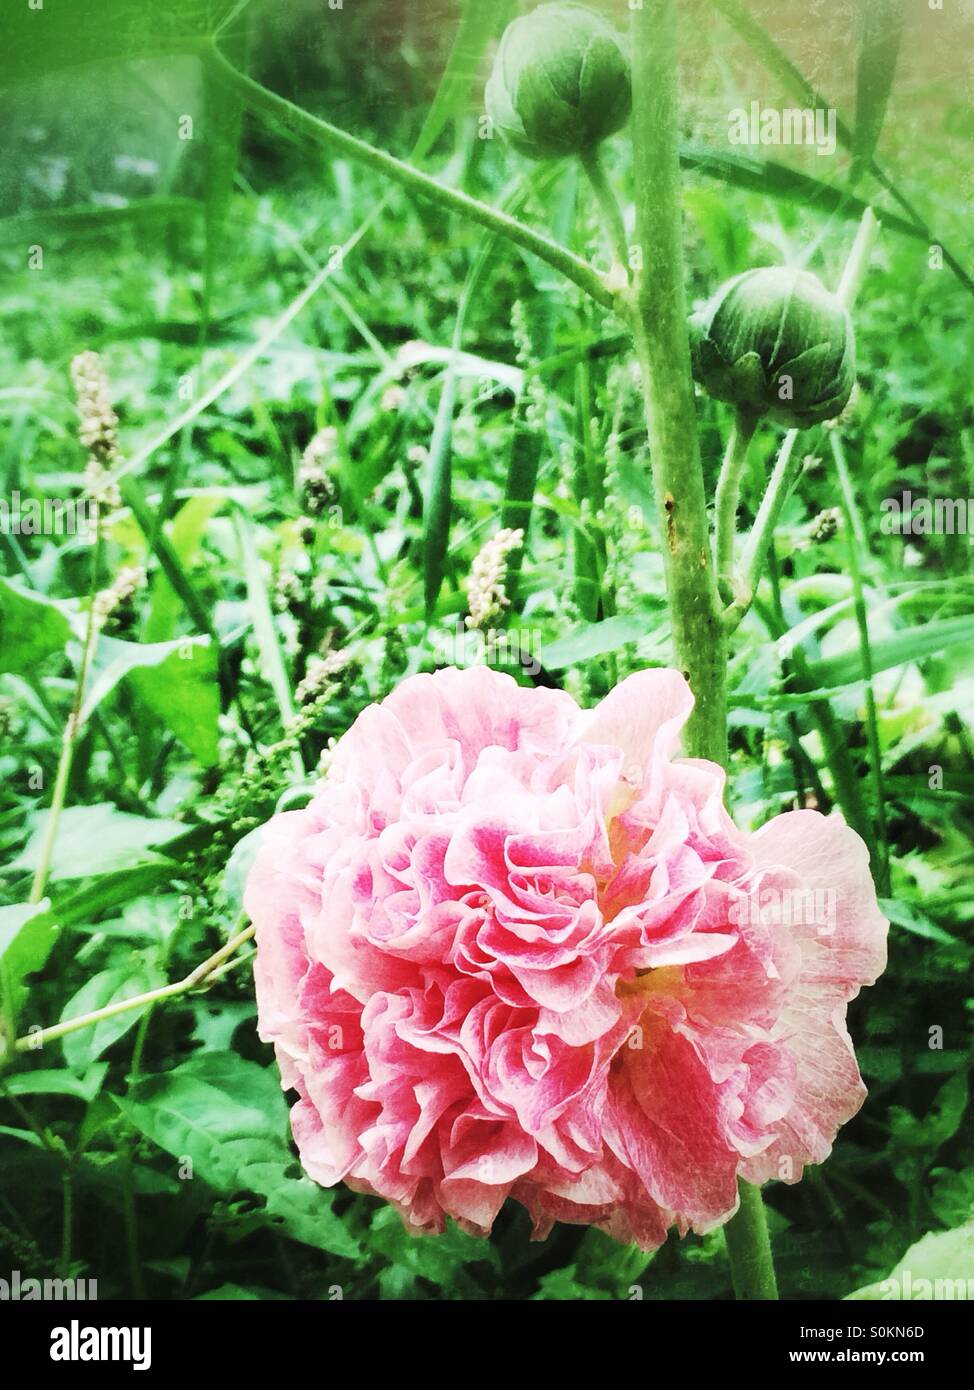 Rosa Stockrose Blume mit Knospen Stockfoto